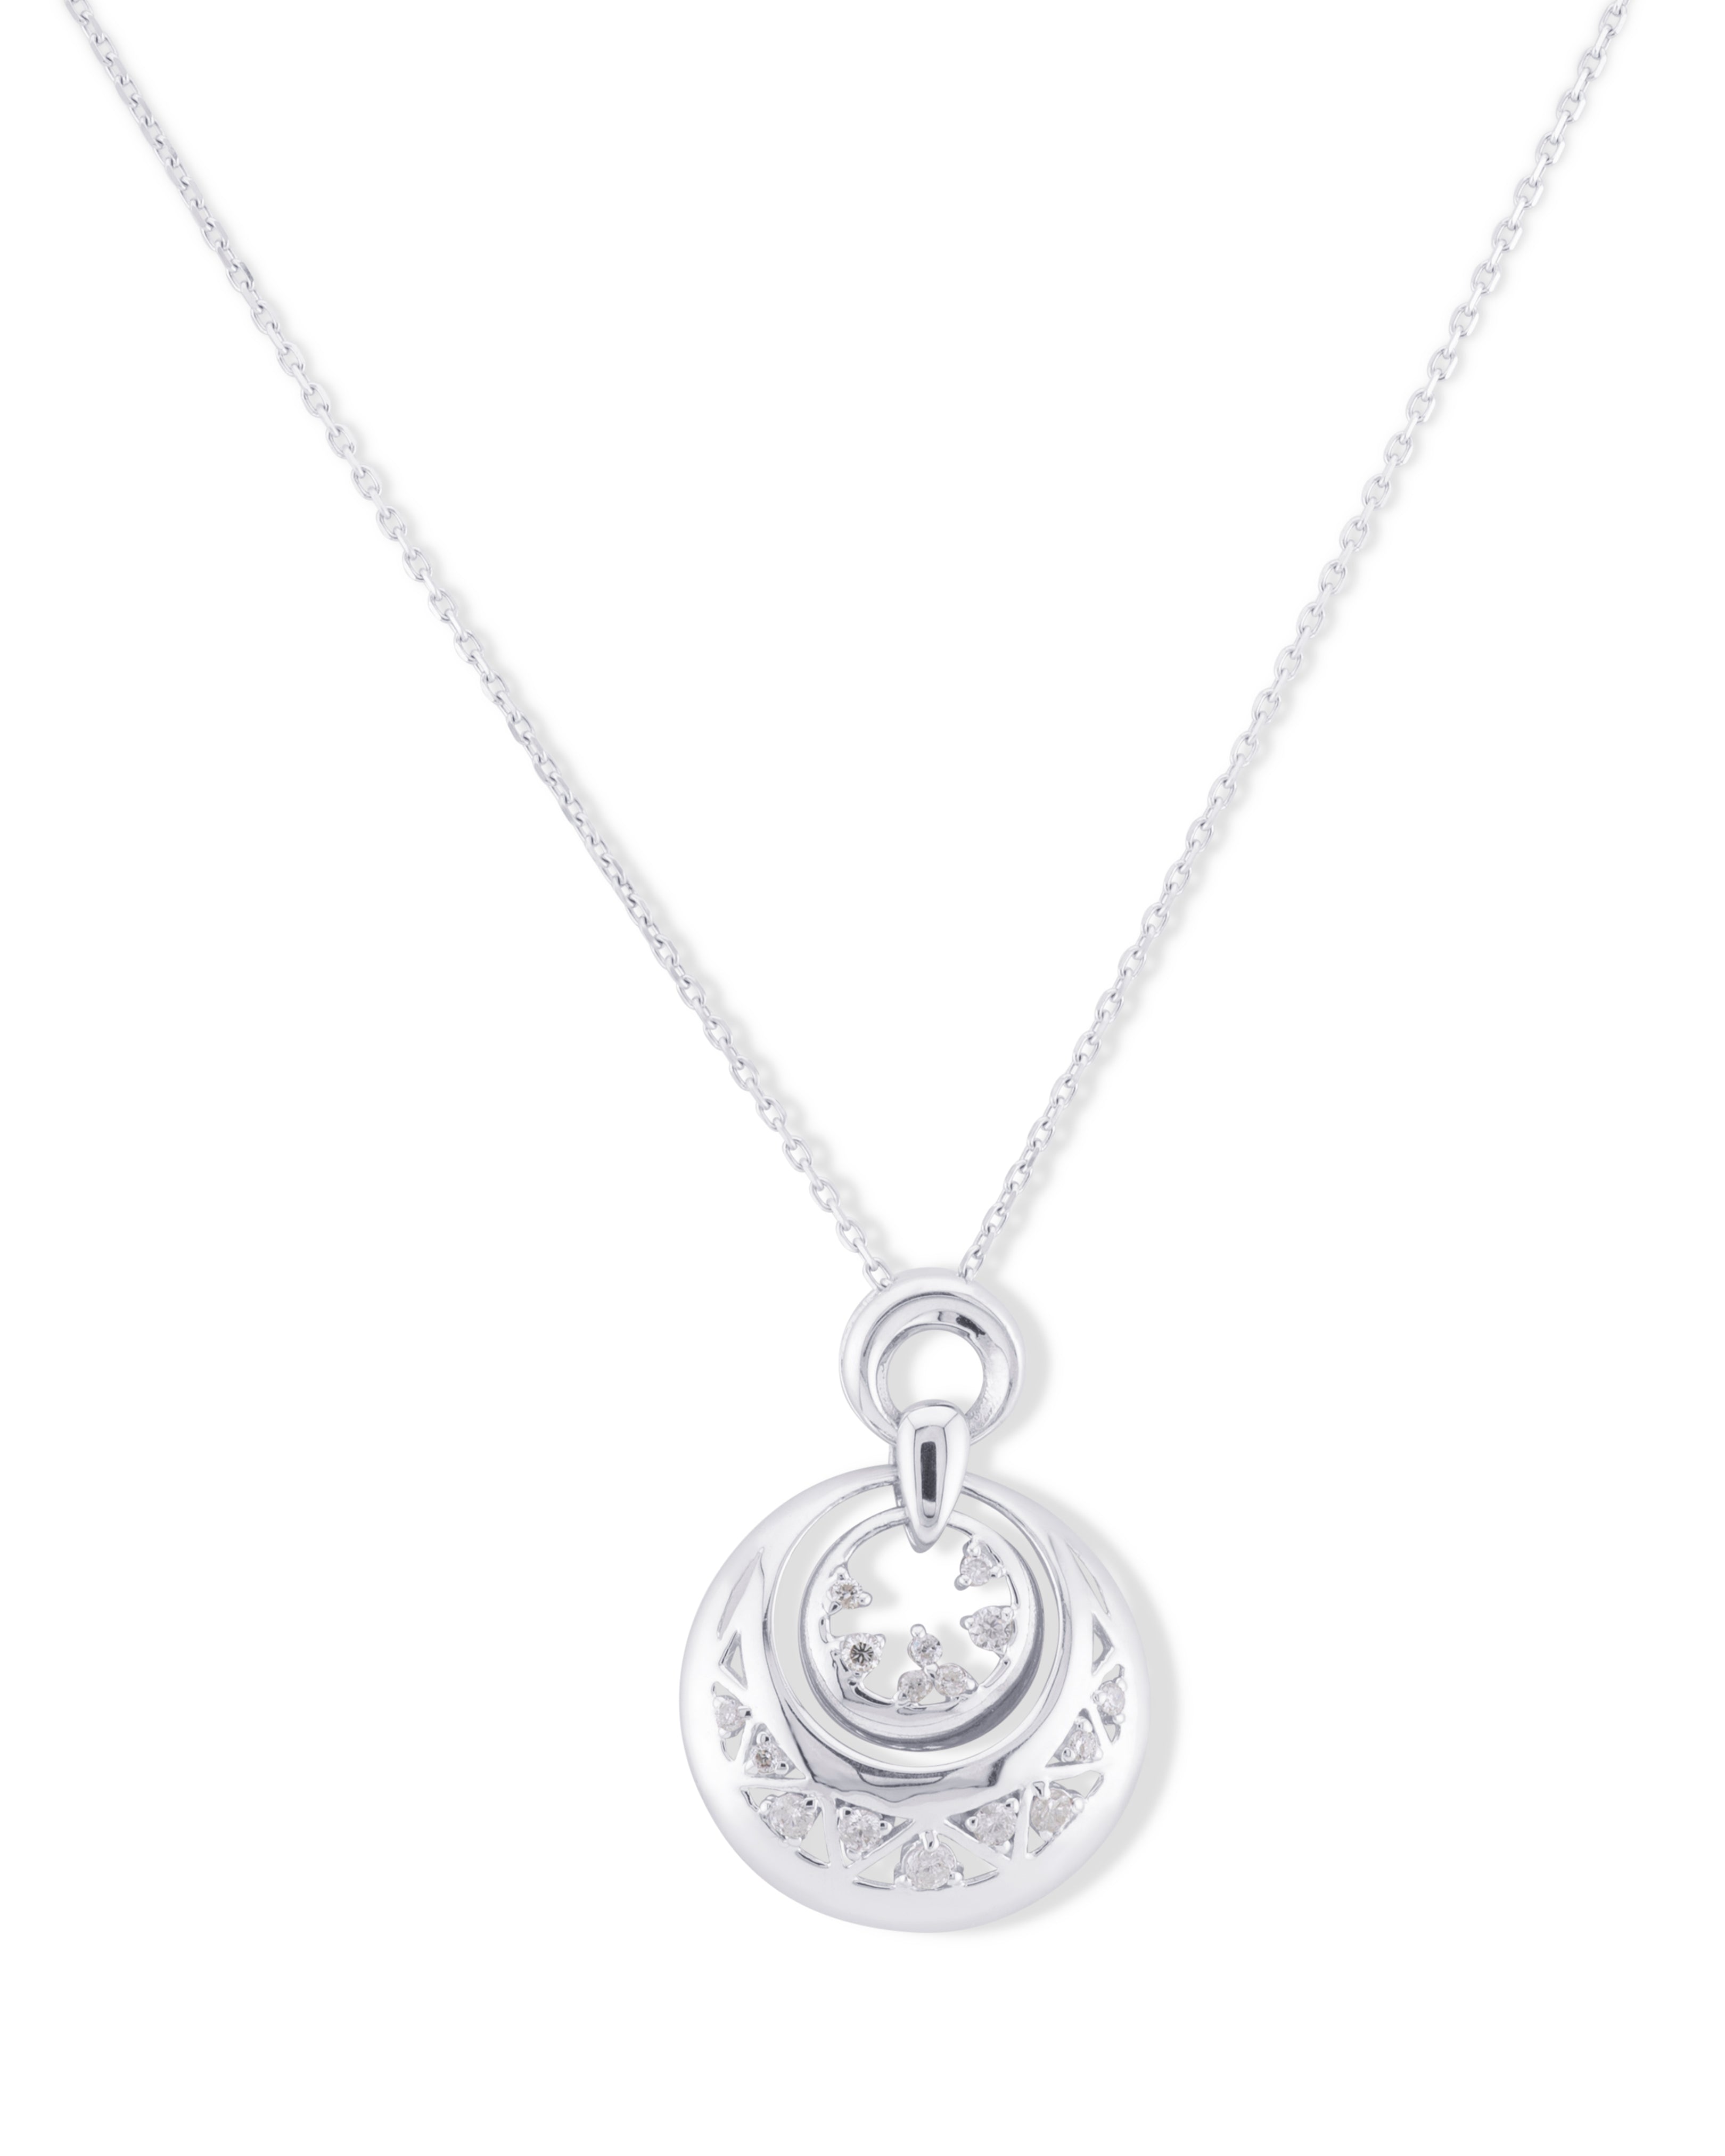 AMORE- Sparkling Orbit Necklace